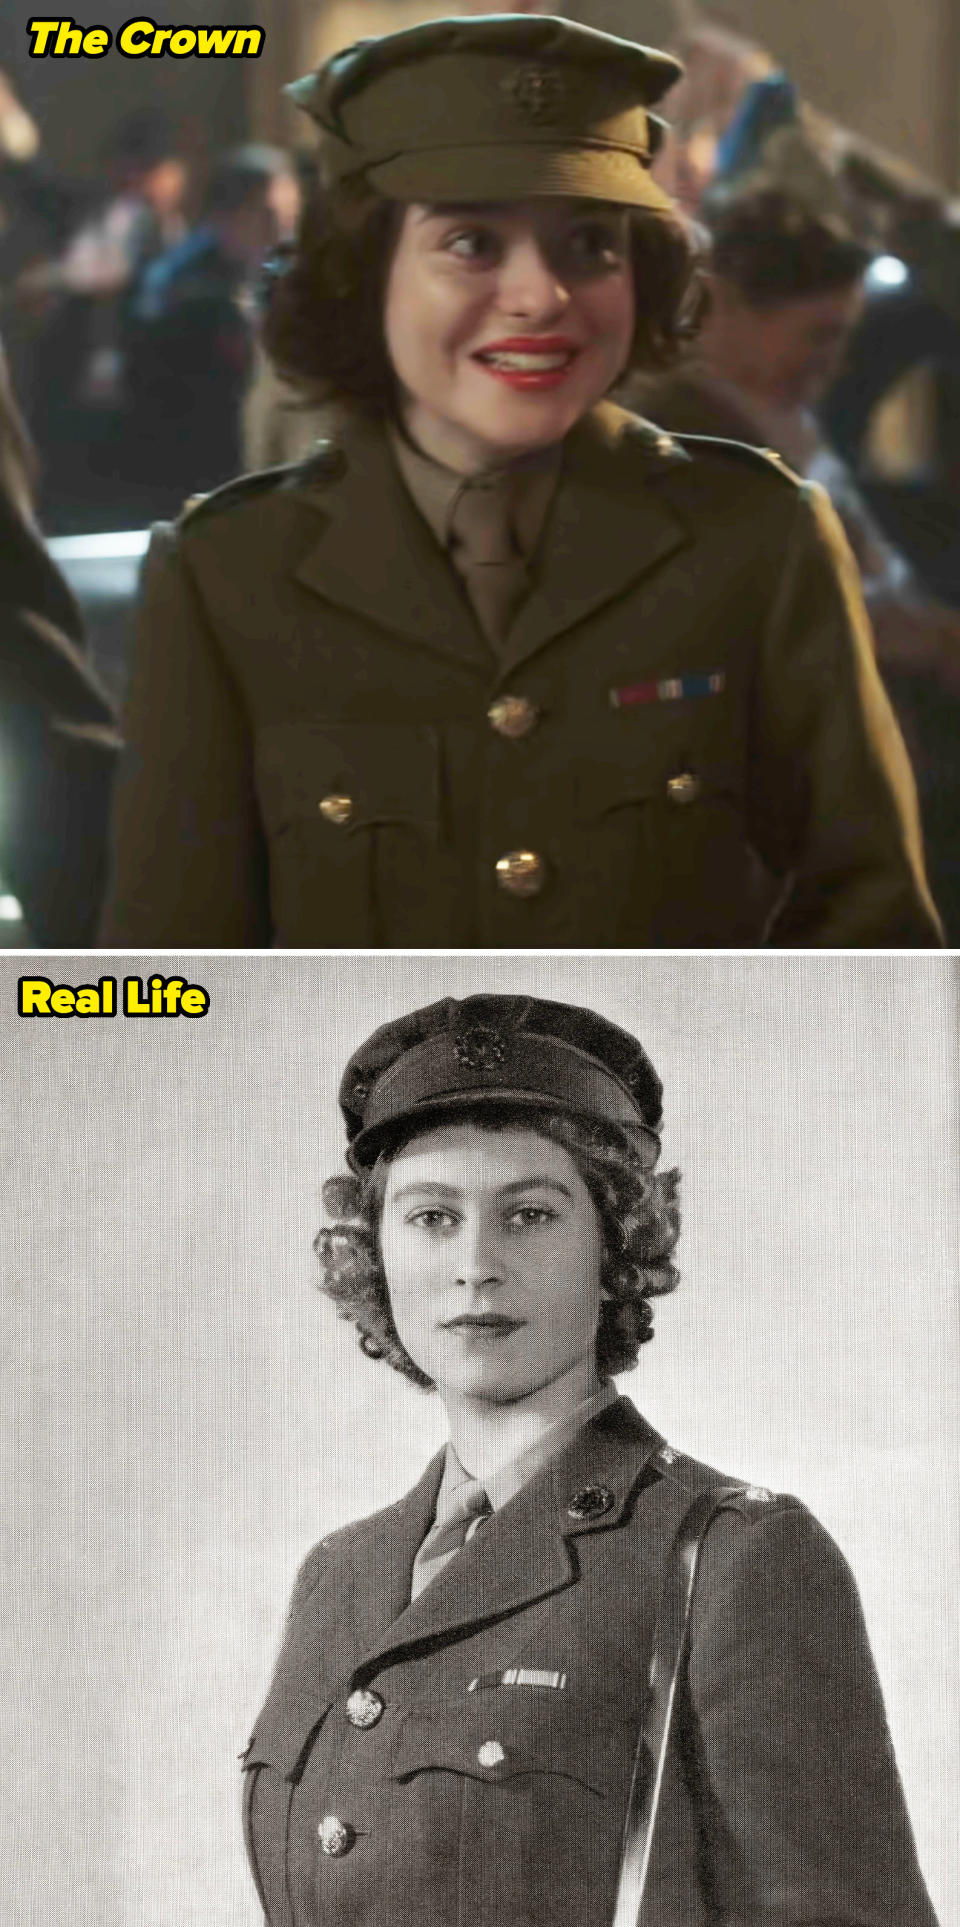 Princess Elizabeth in real life vs. "The Crown"